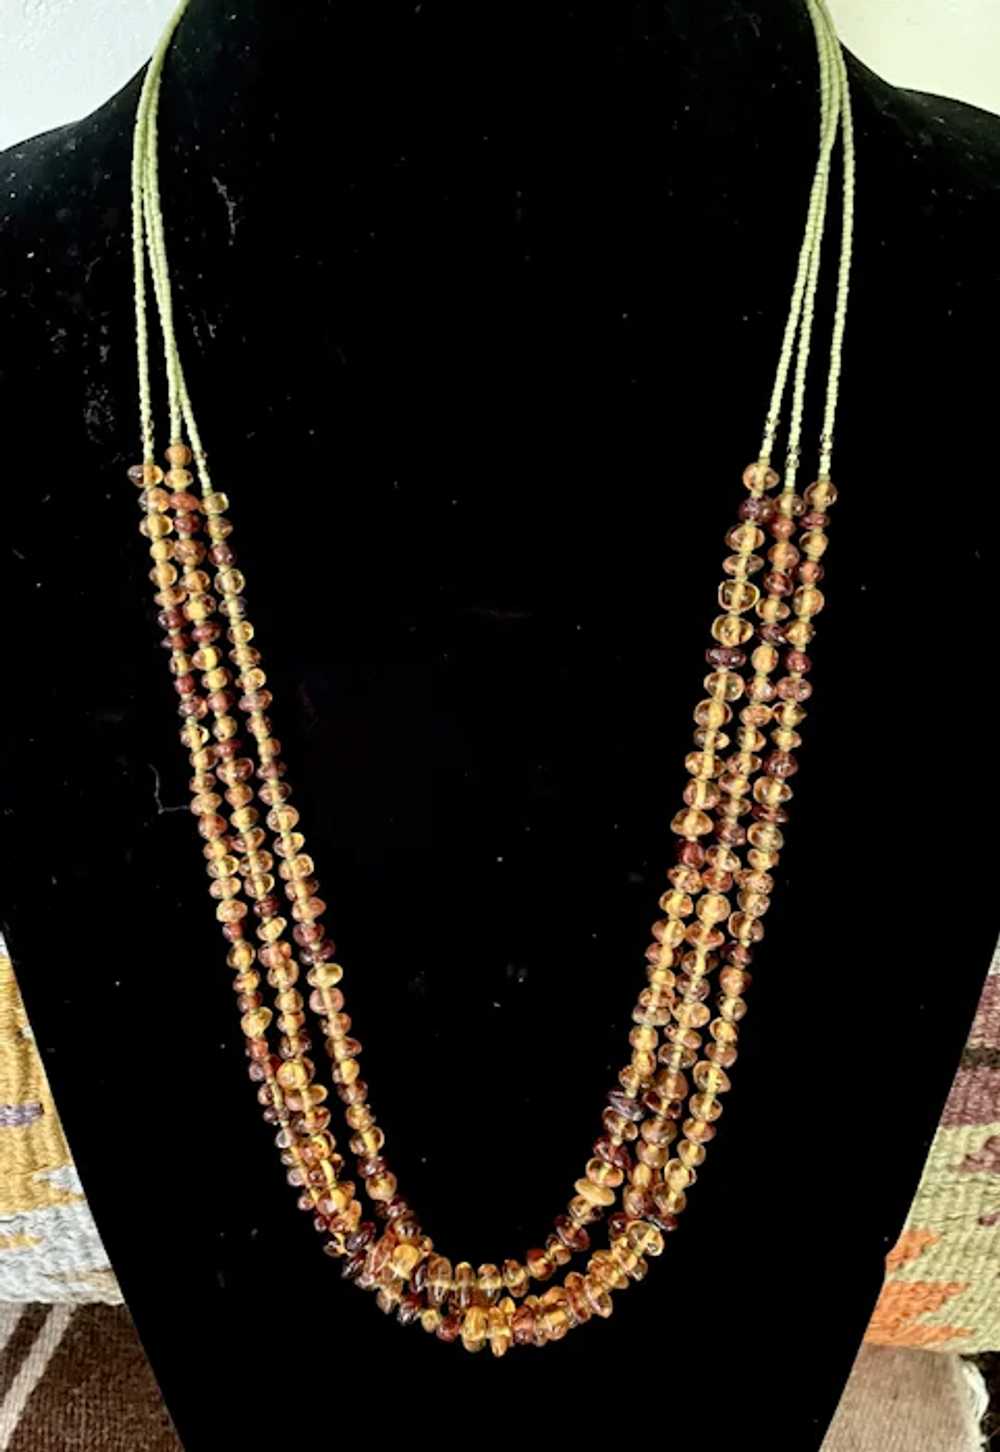 Artisan Tri-Strand Baltic Amber Necklace - image 2